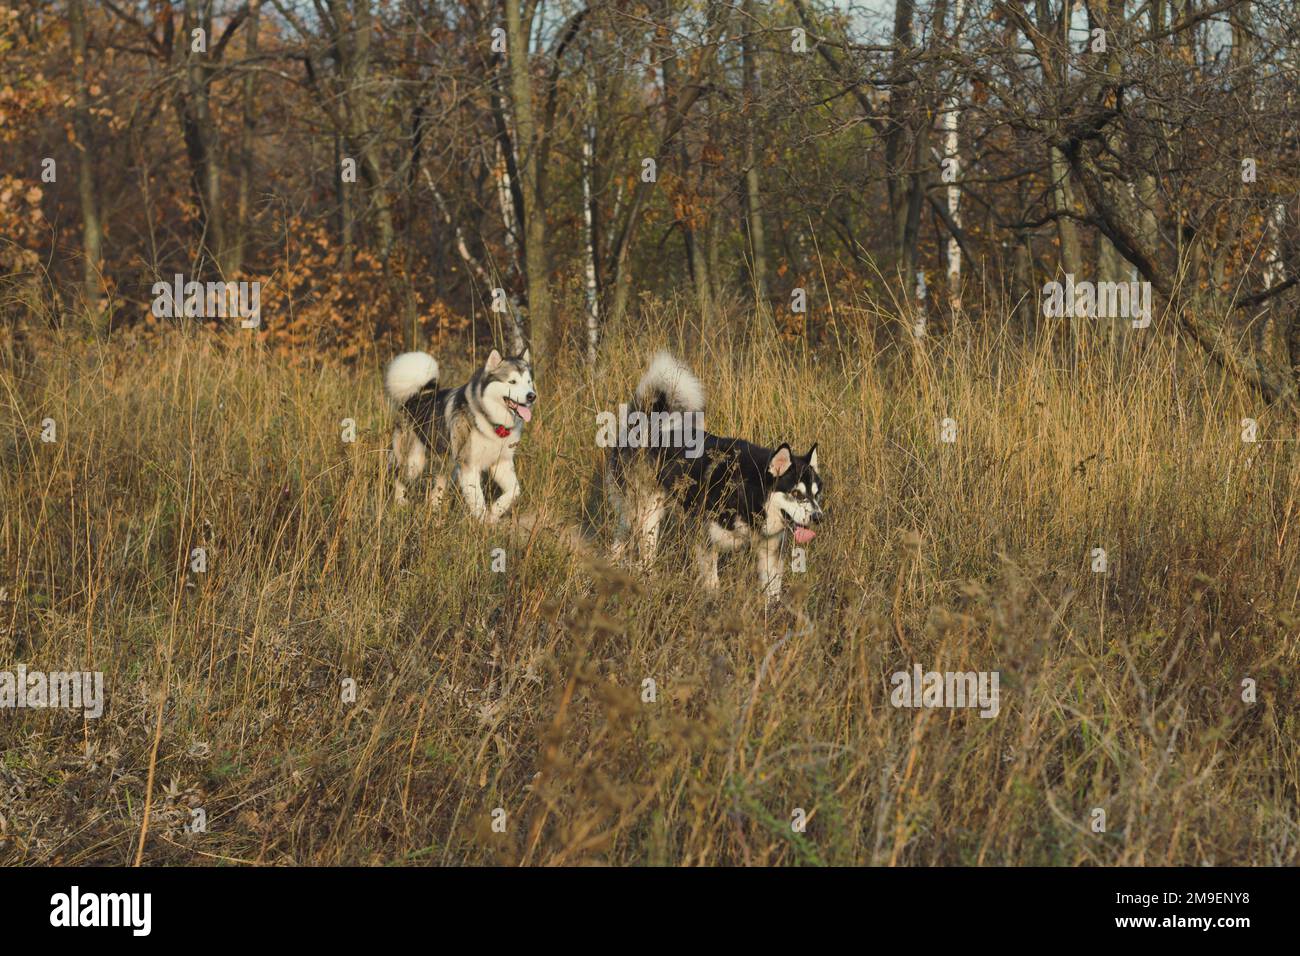 Siberian huskies walking through high dry grass scenic photography Stock Photo